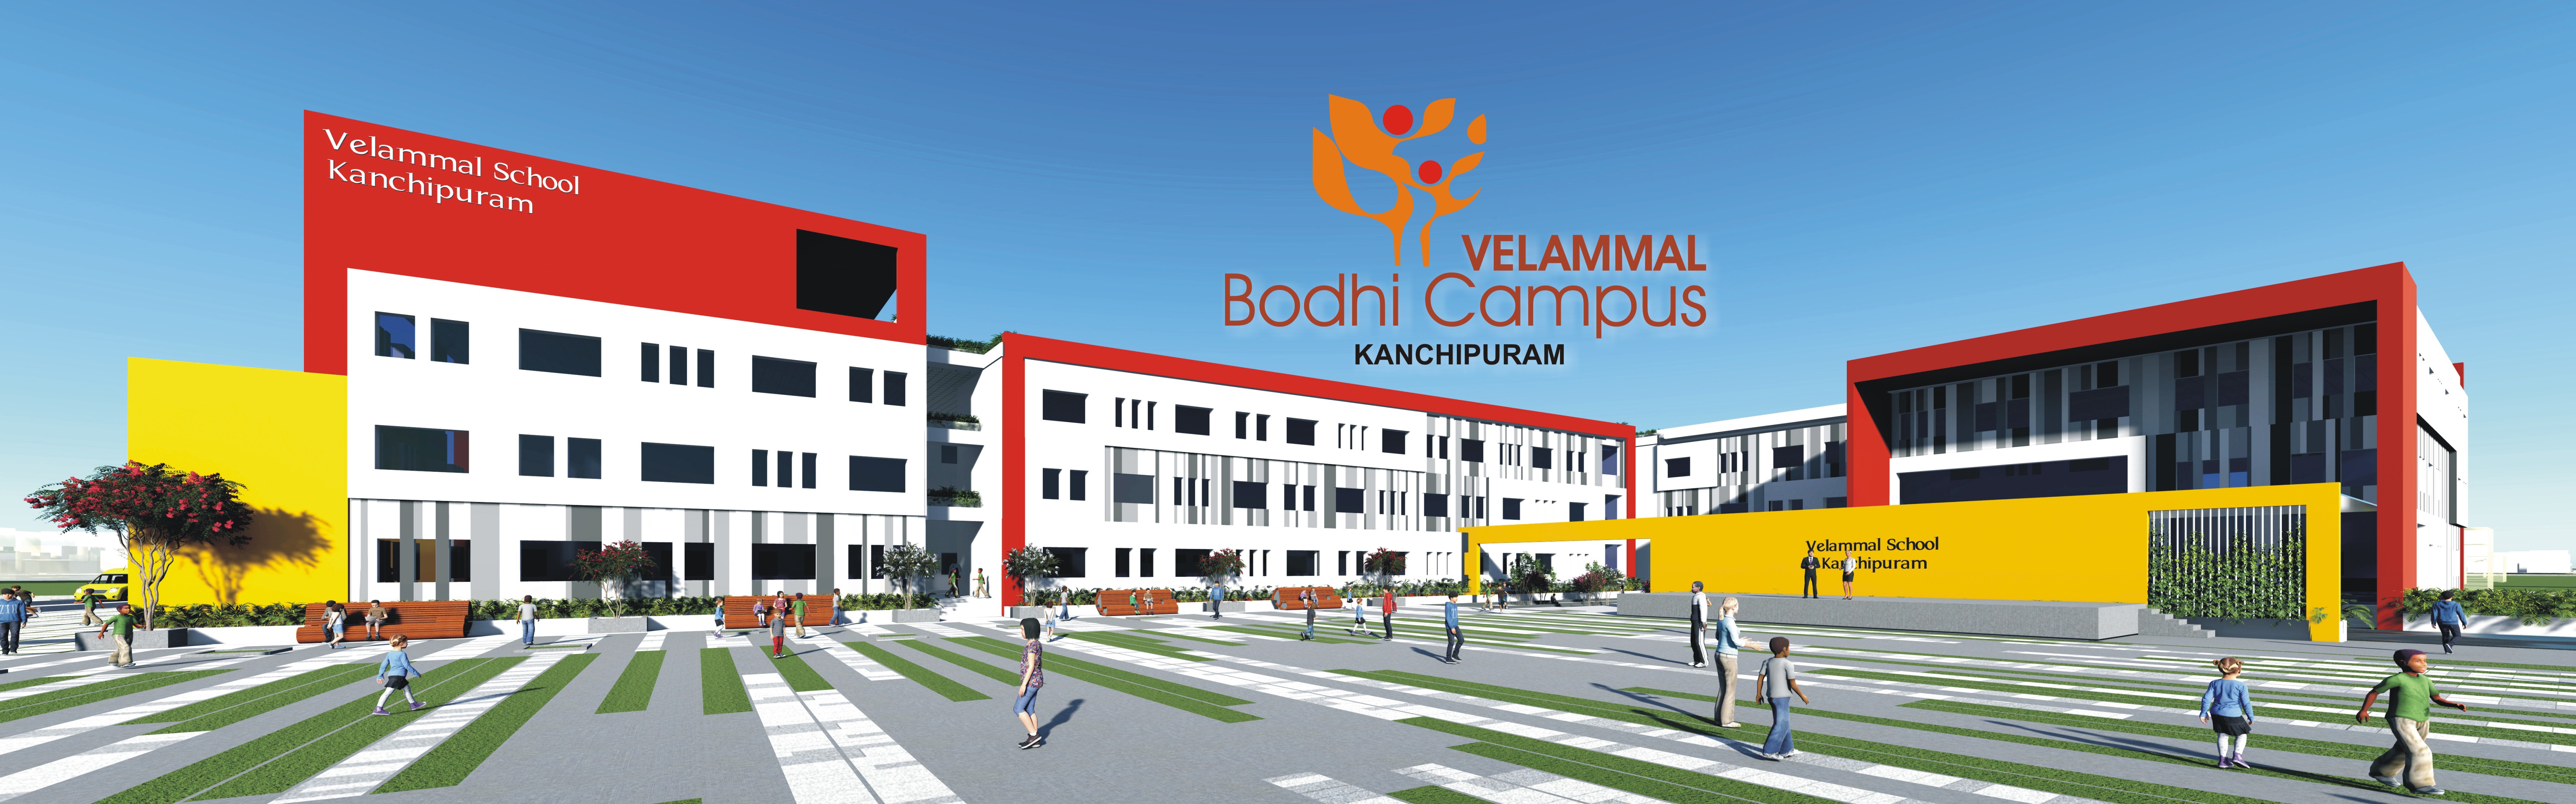 Kanchipuram Campus - Velammal Bodhi Campus